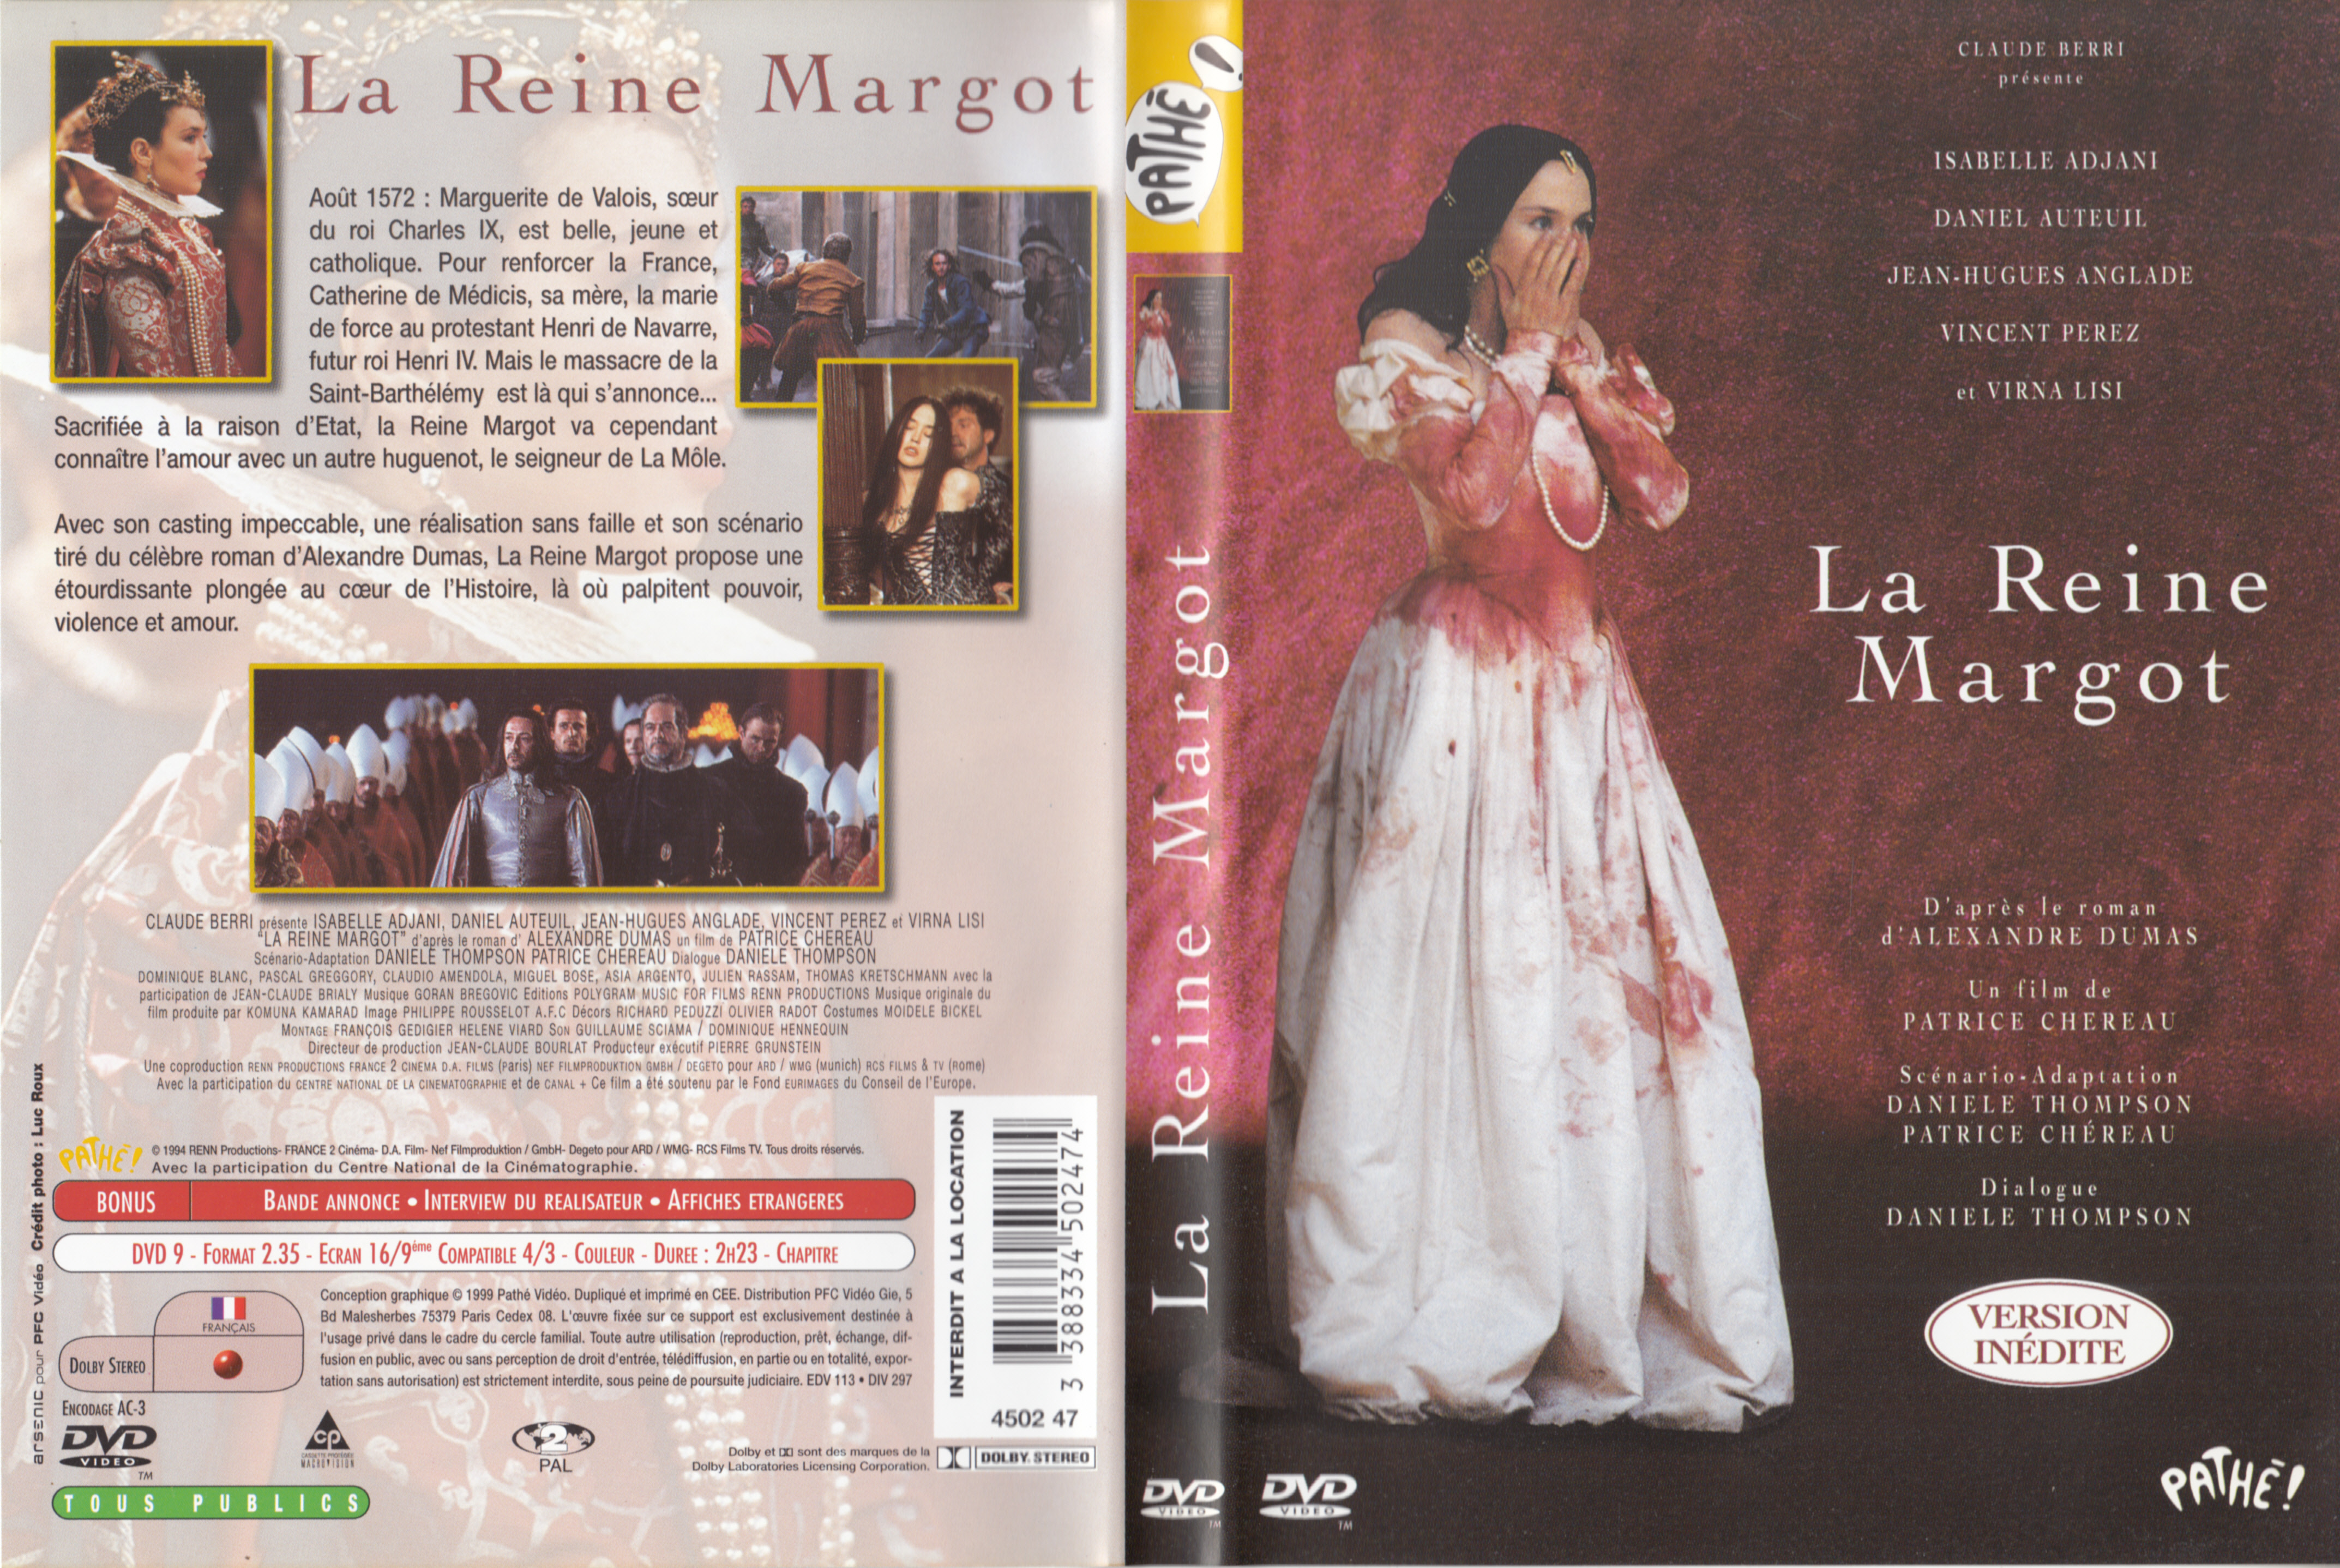 Jaquette DVD La Reine Margot v4